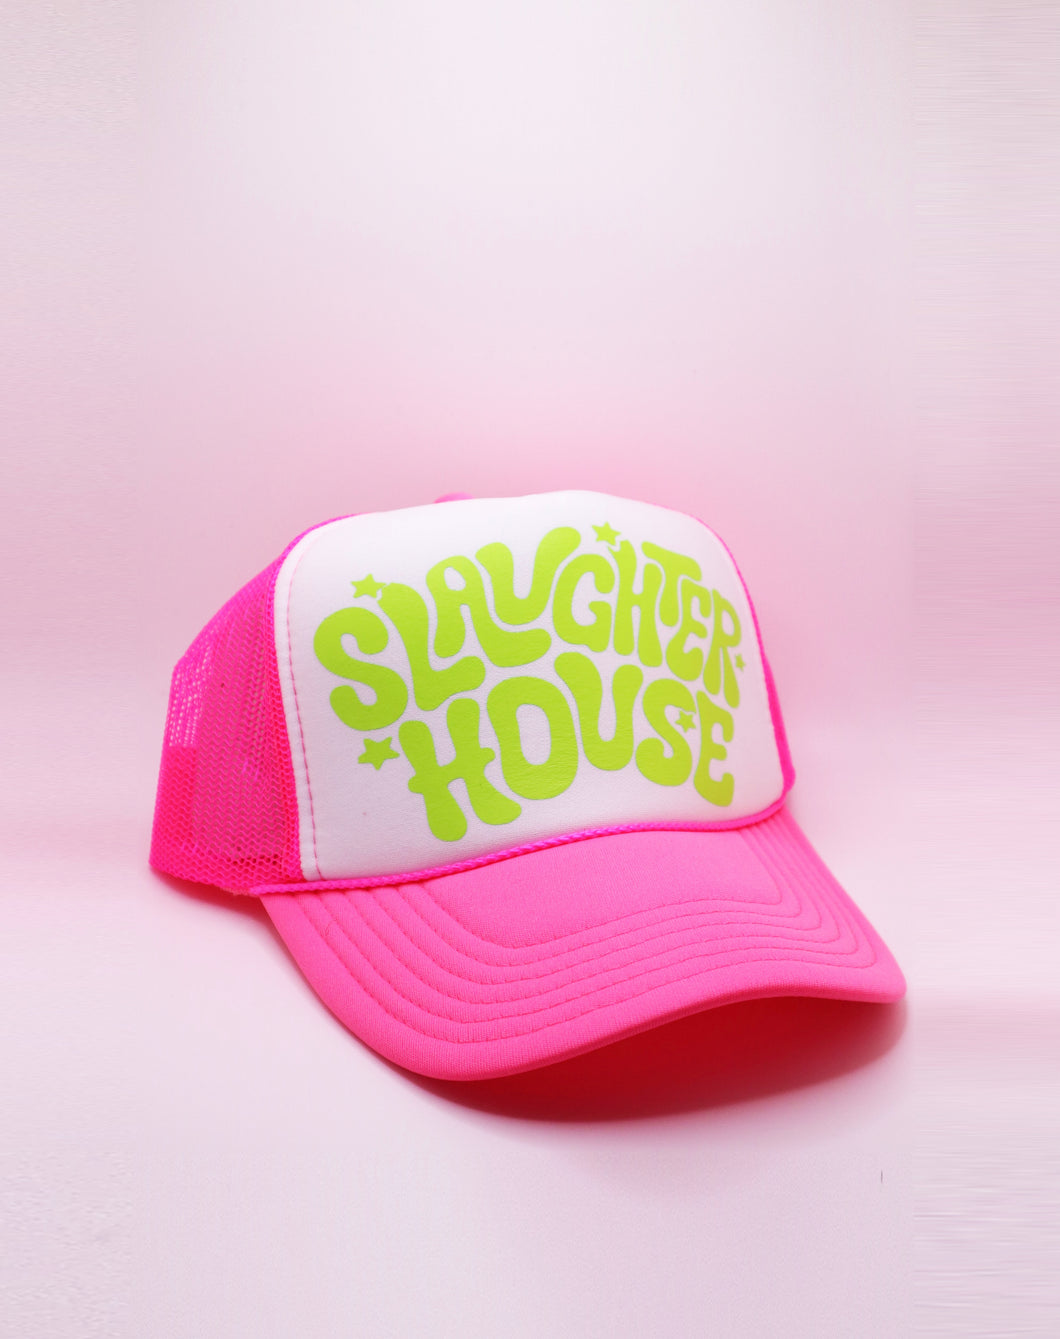 “Seeing Stars” Trucker Hat - Neon Pink/Neon Green